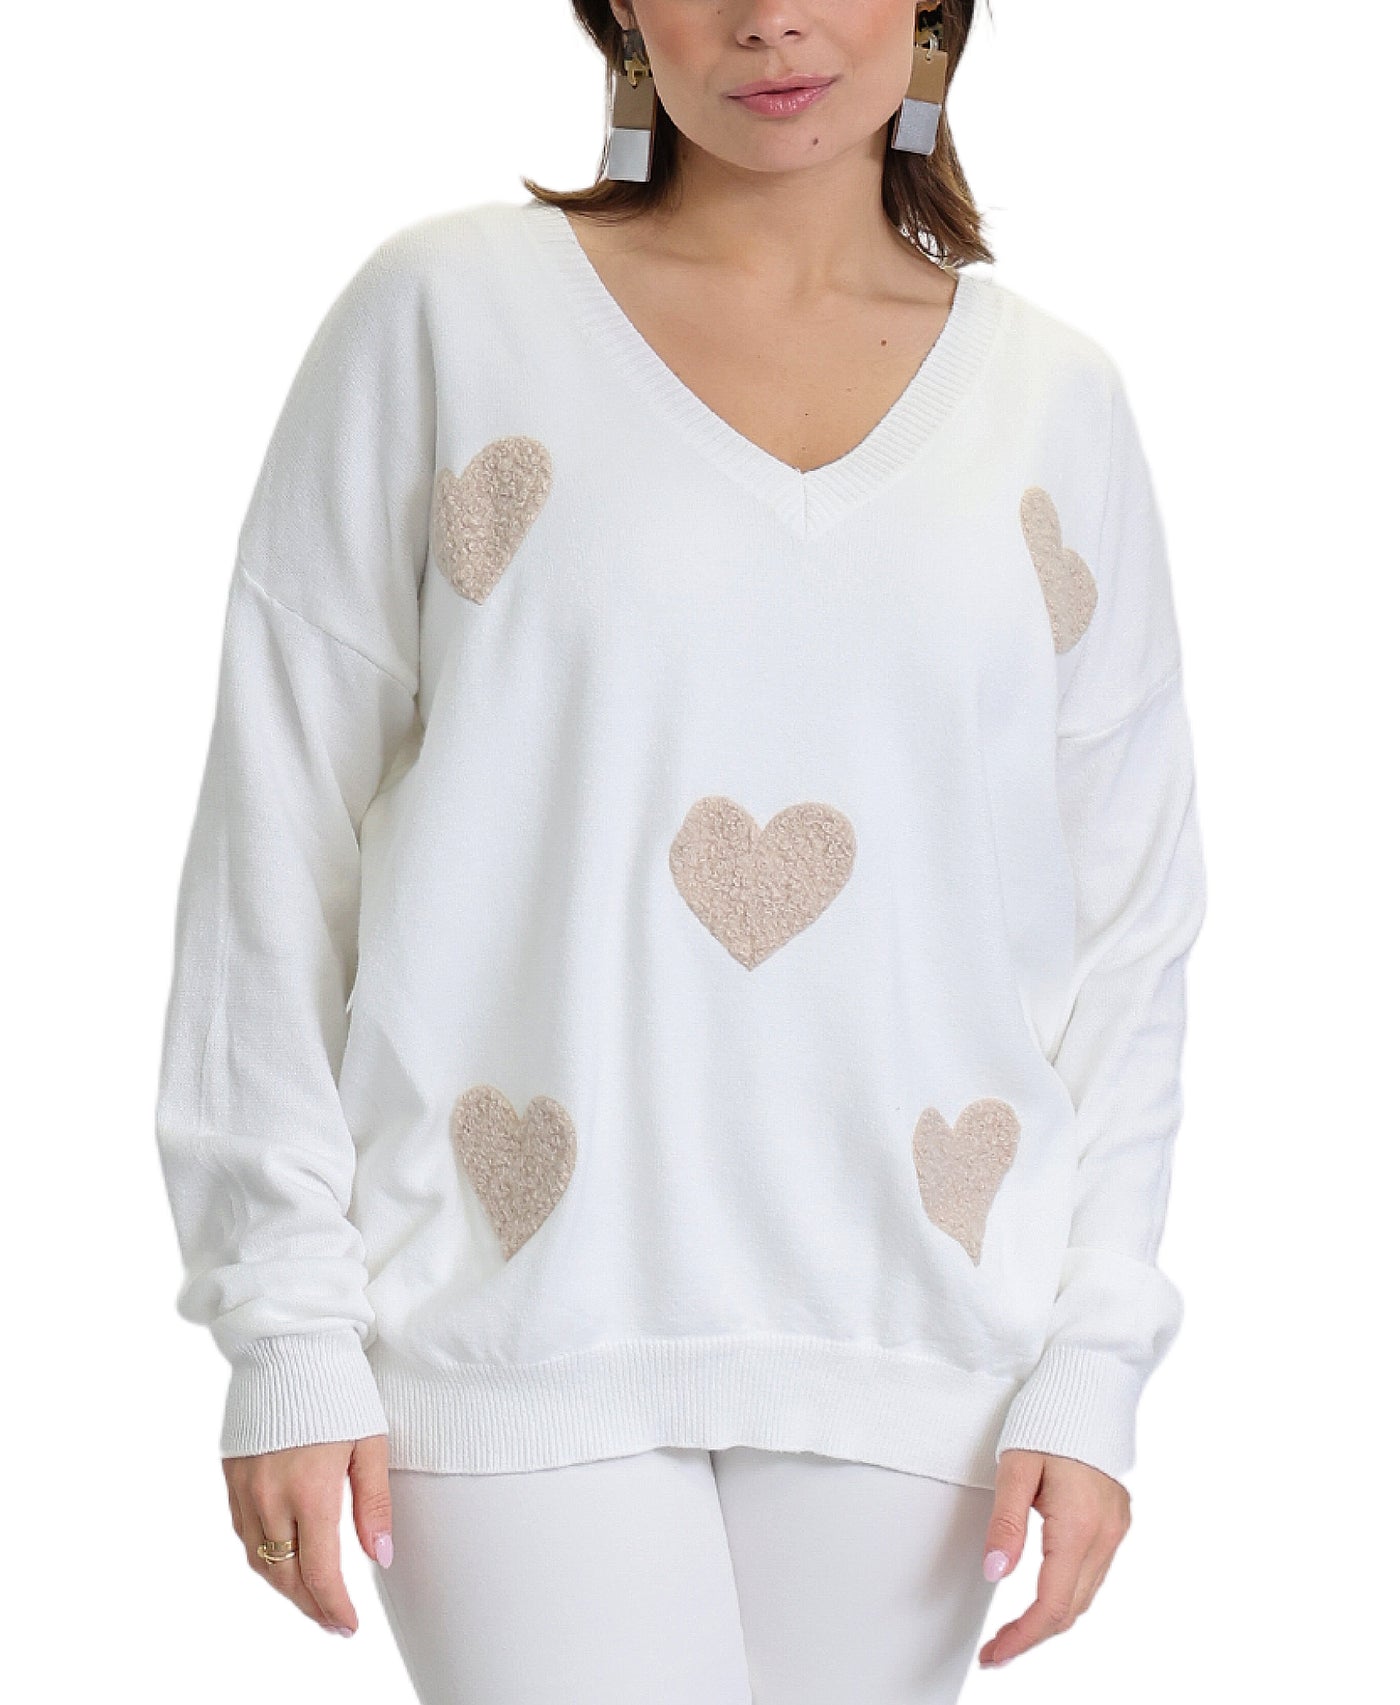 Sweater w/ Hearts image 1